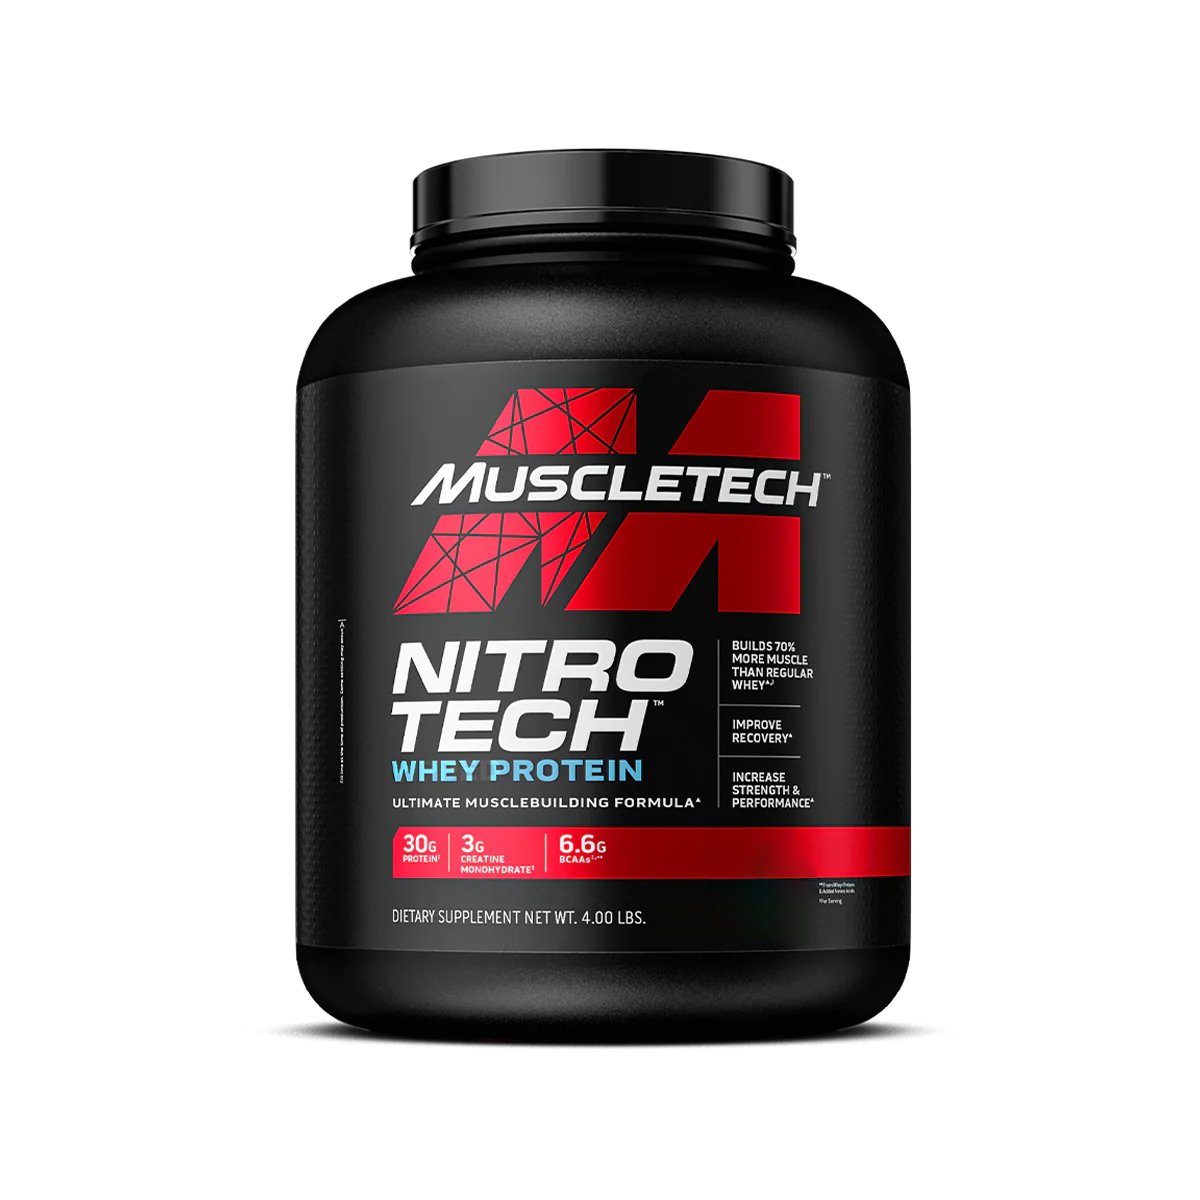 Протеин Muscletech Nitro Tech Whey Protein, 1.81 кг Ваниль,  ml, MuscleTech. Protein. Mass Gain recovery Anti-catabolic properties 